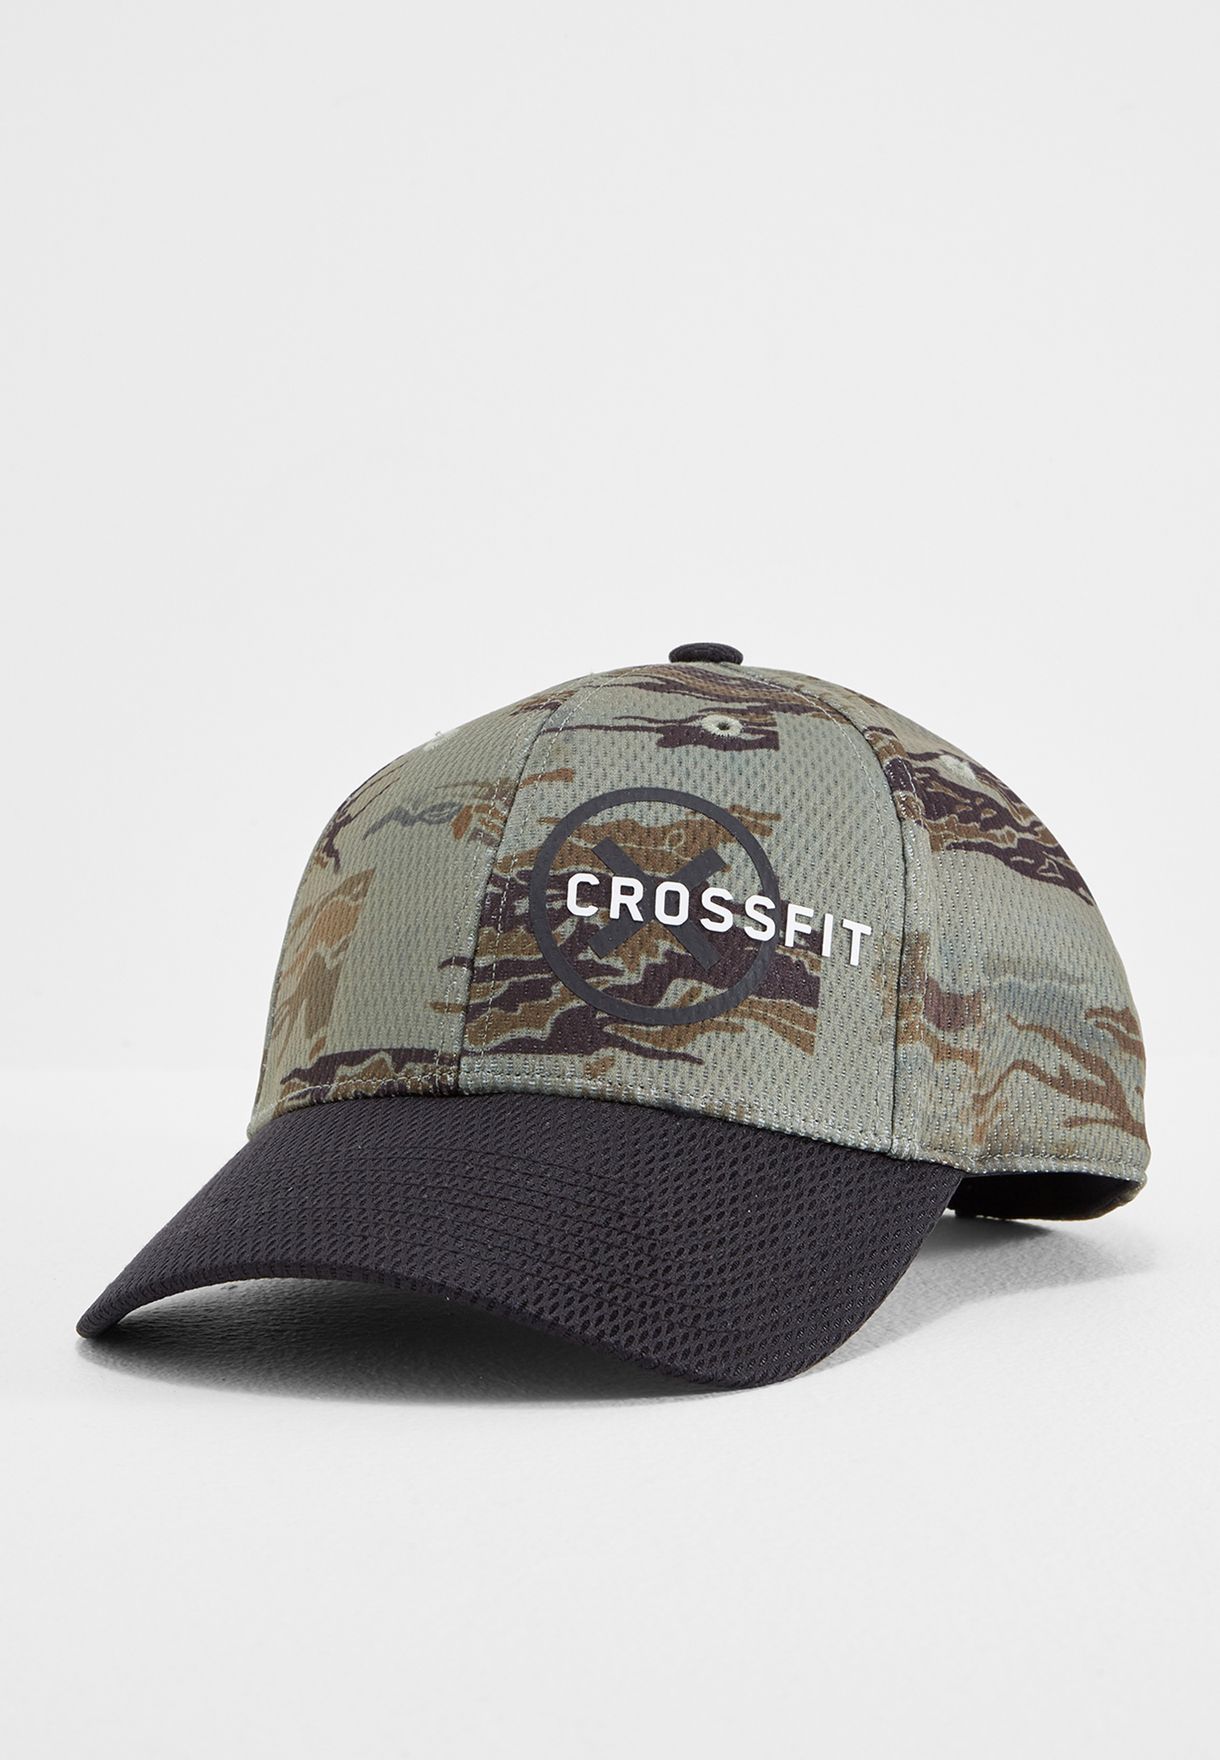 crossfit baseball cap